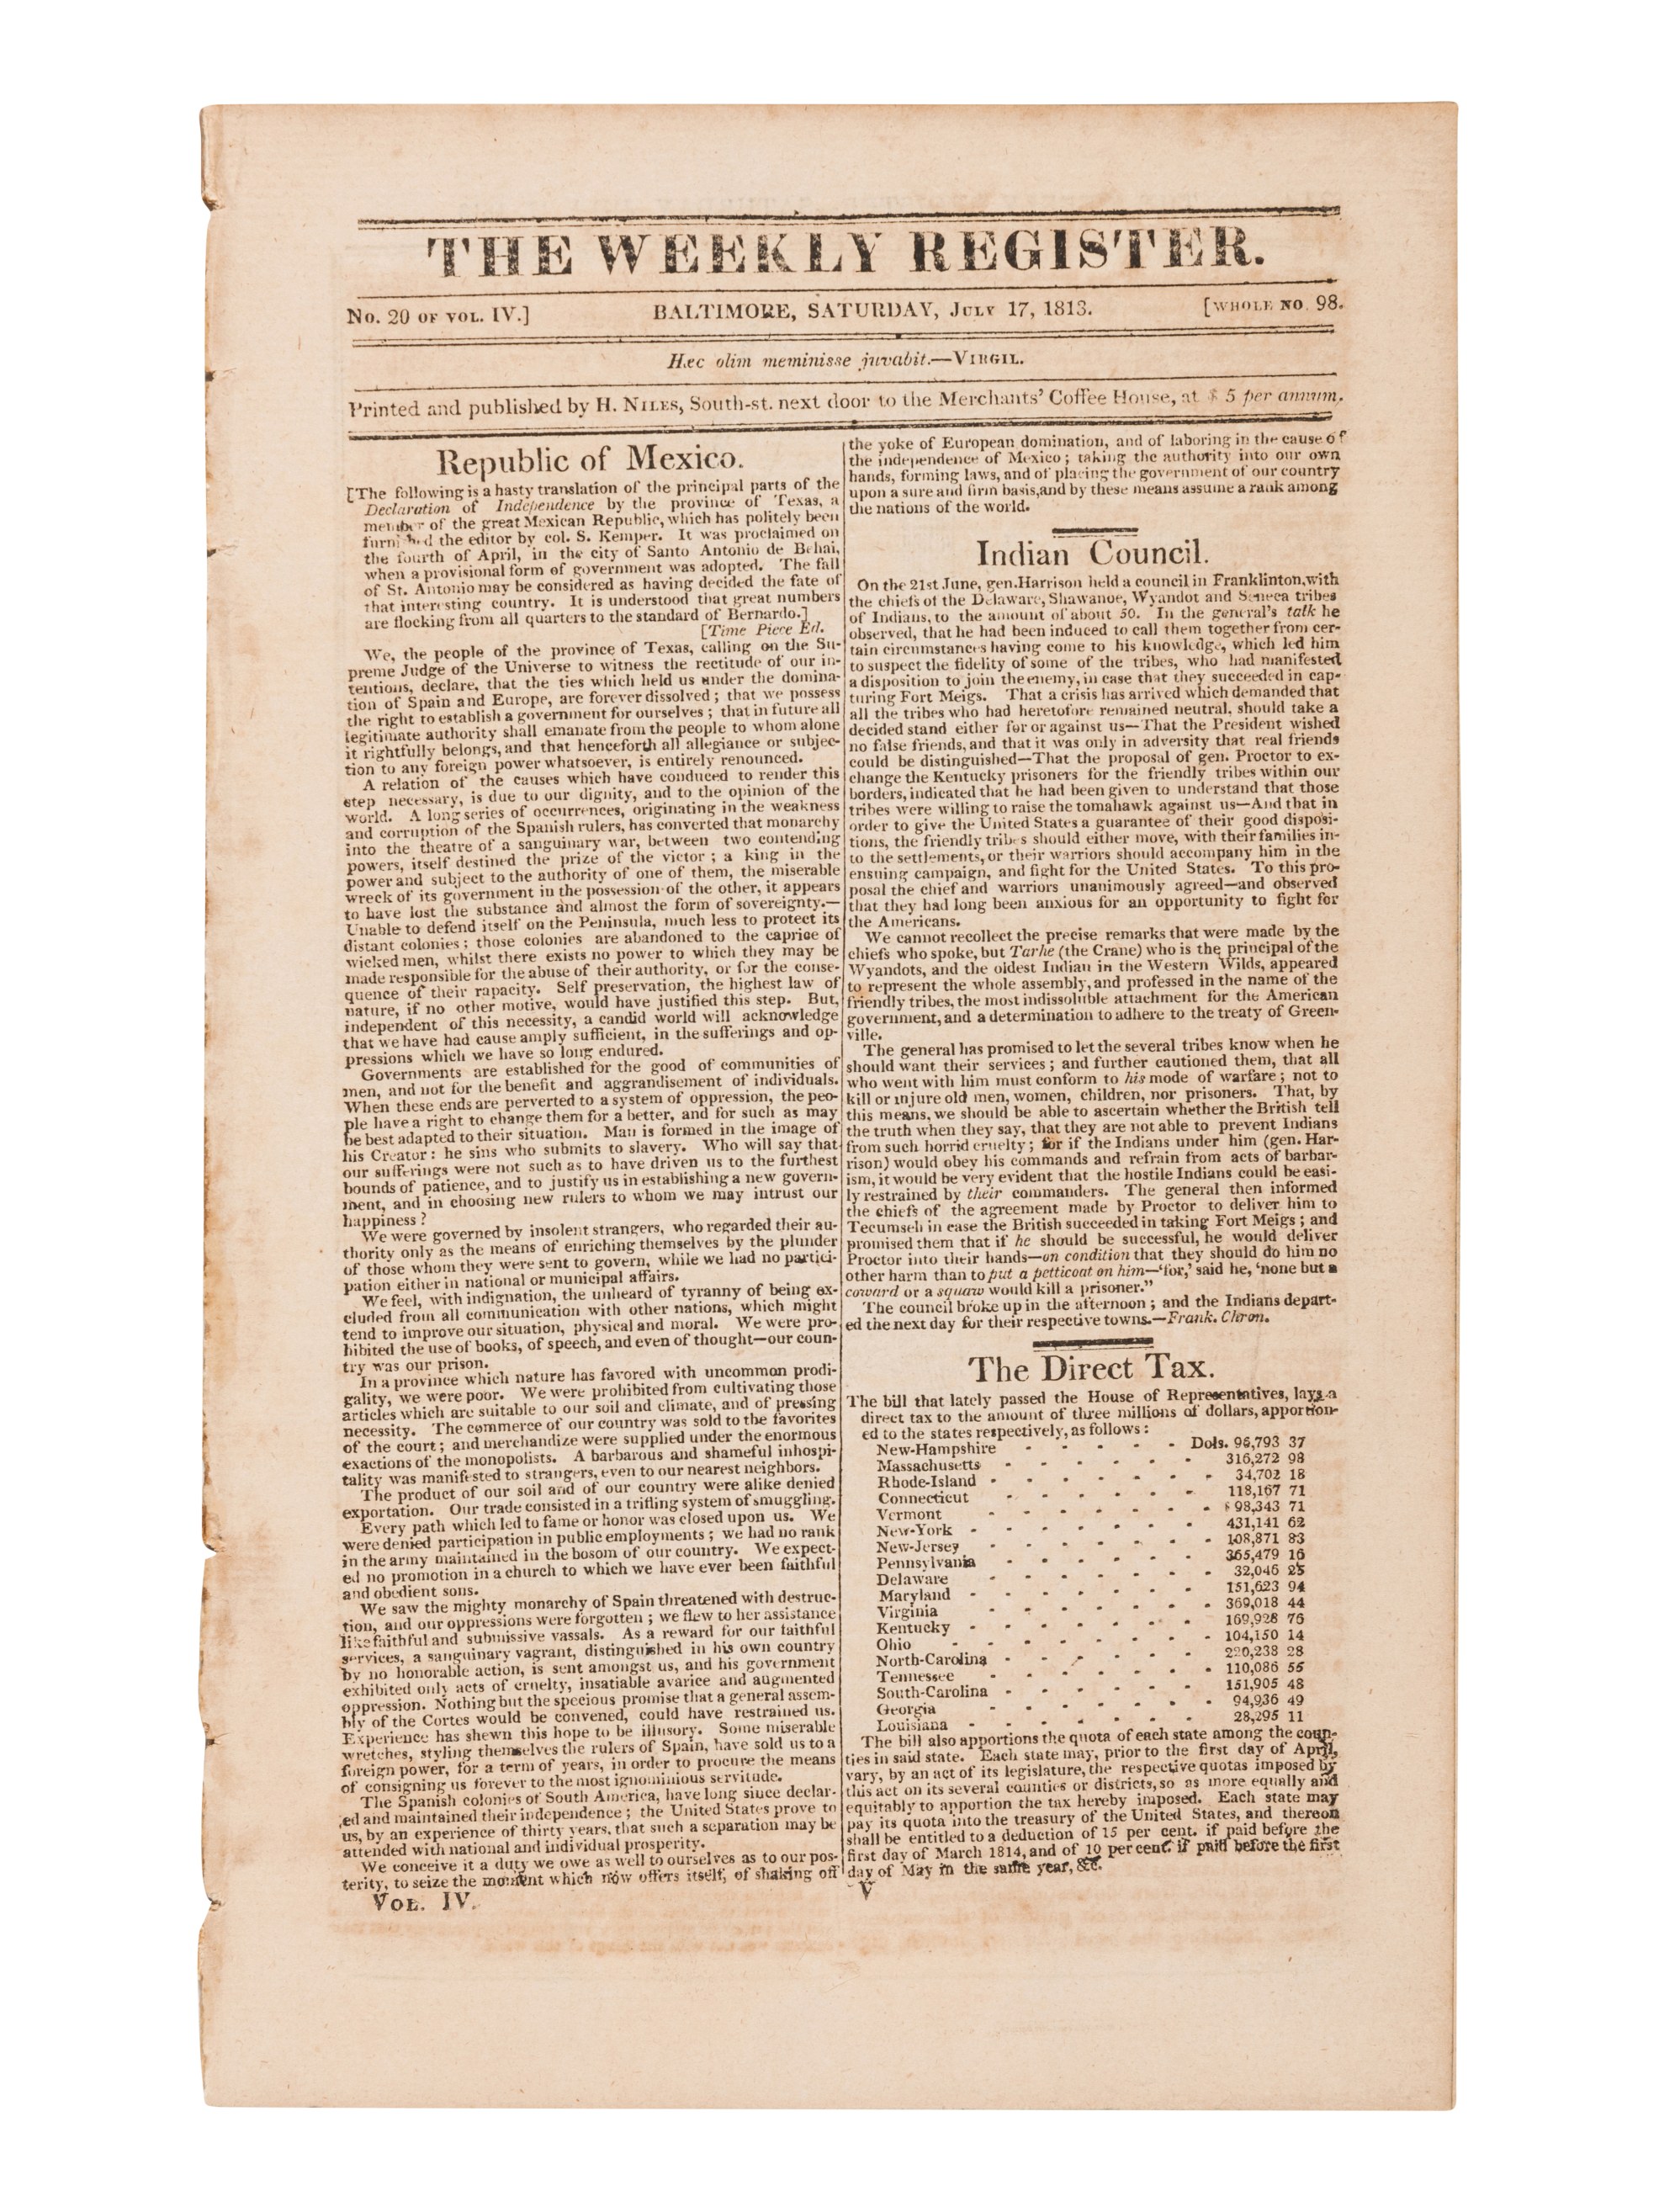 [NEWSPAPER - TEXAS NEWS - THE ALAMO]. Niles Weekly Register. Vol. 49 (September 5, 1835-February 27,